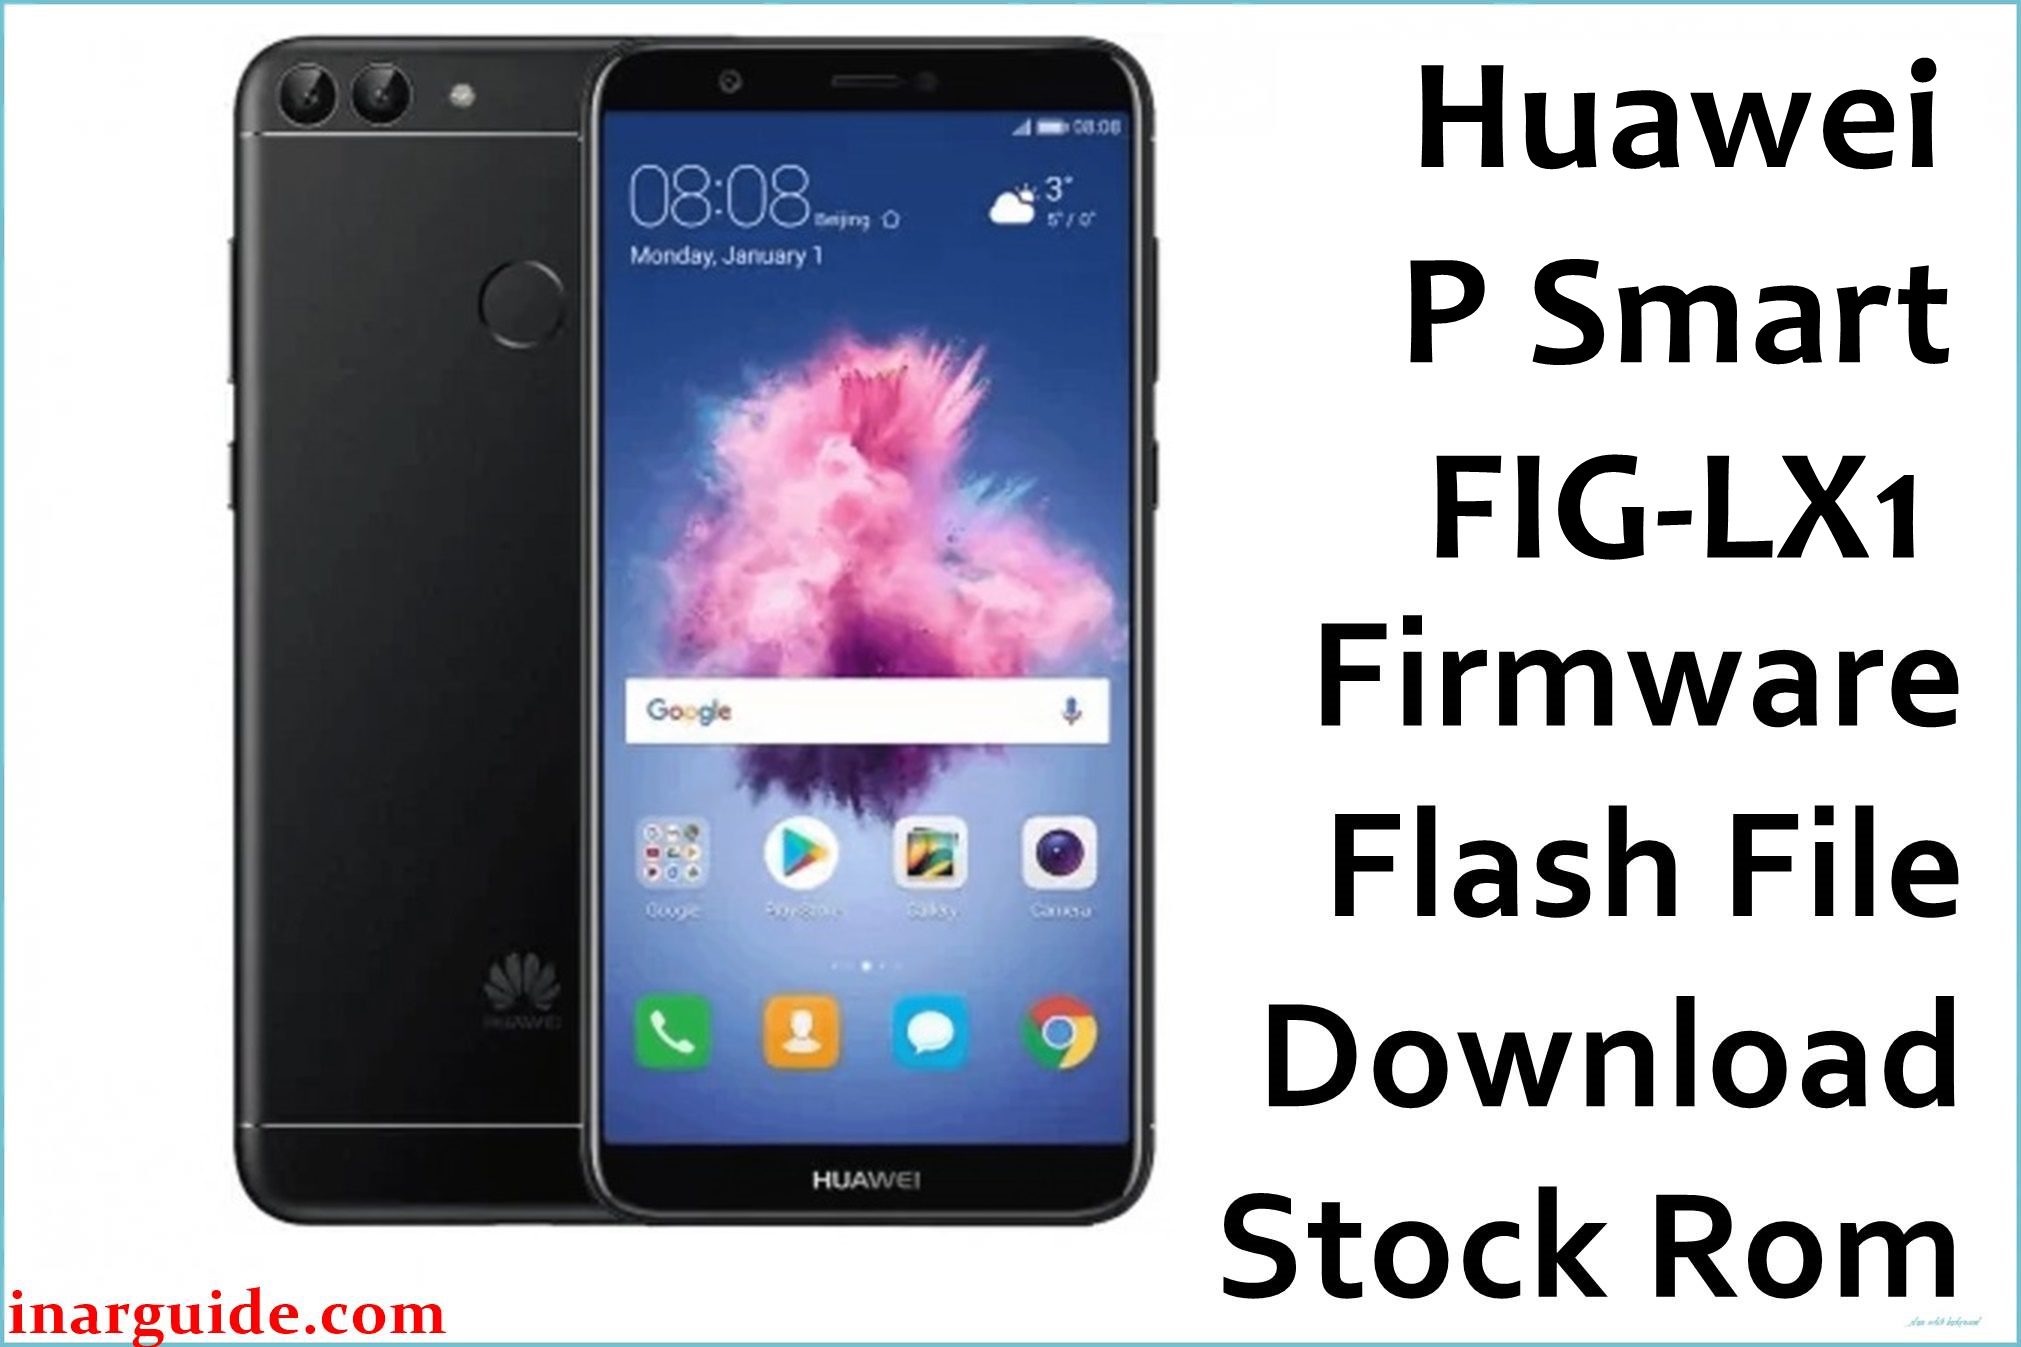 Arabiske Sarabo Prestigefyldte Optimisme Huawei P Smart FIG-LX1 Firmware Flash File Download [Stock Rom]